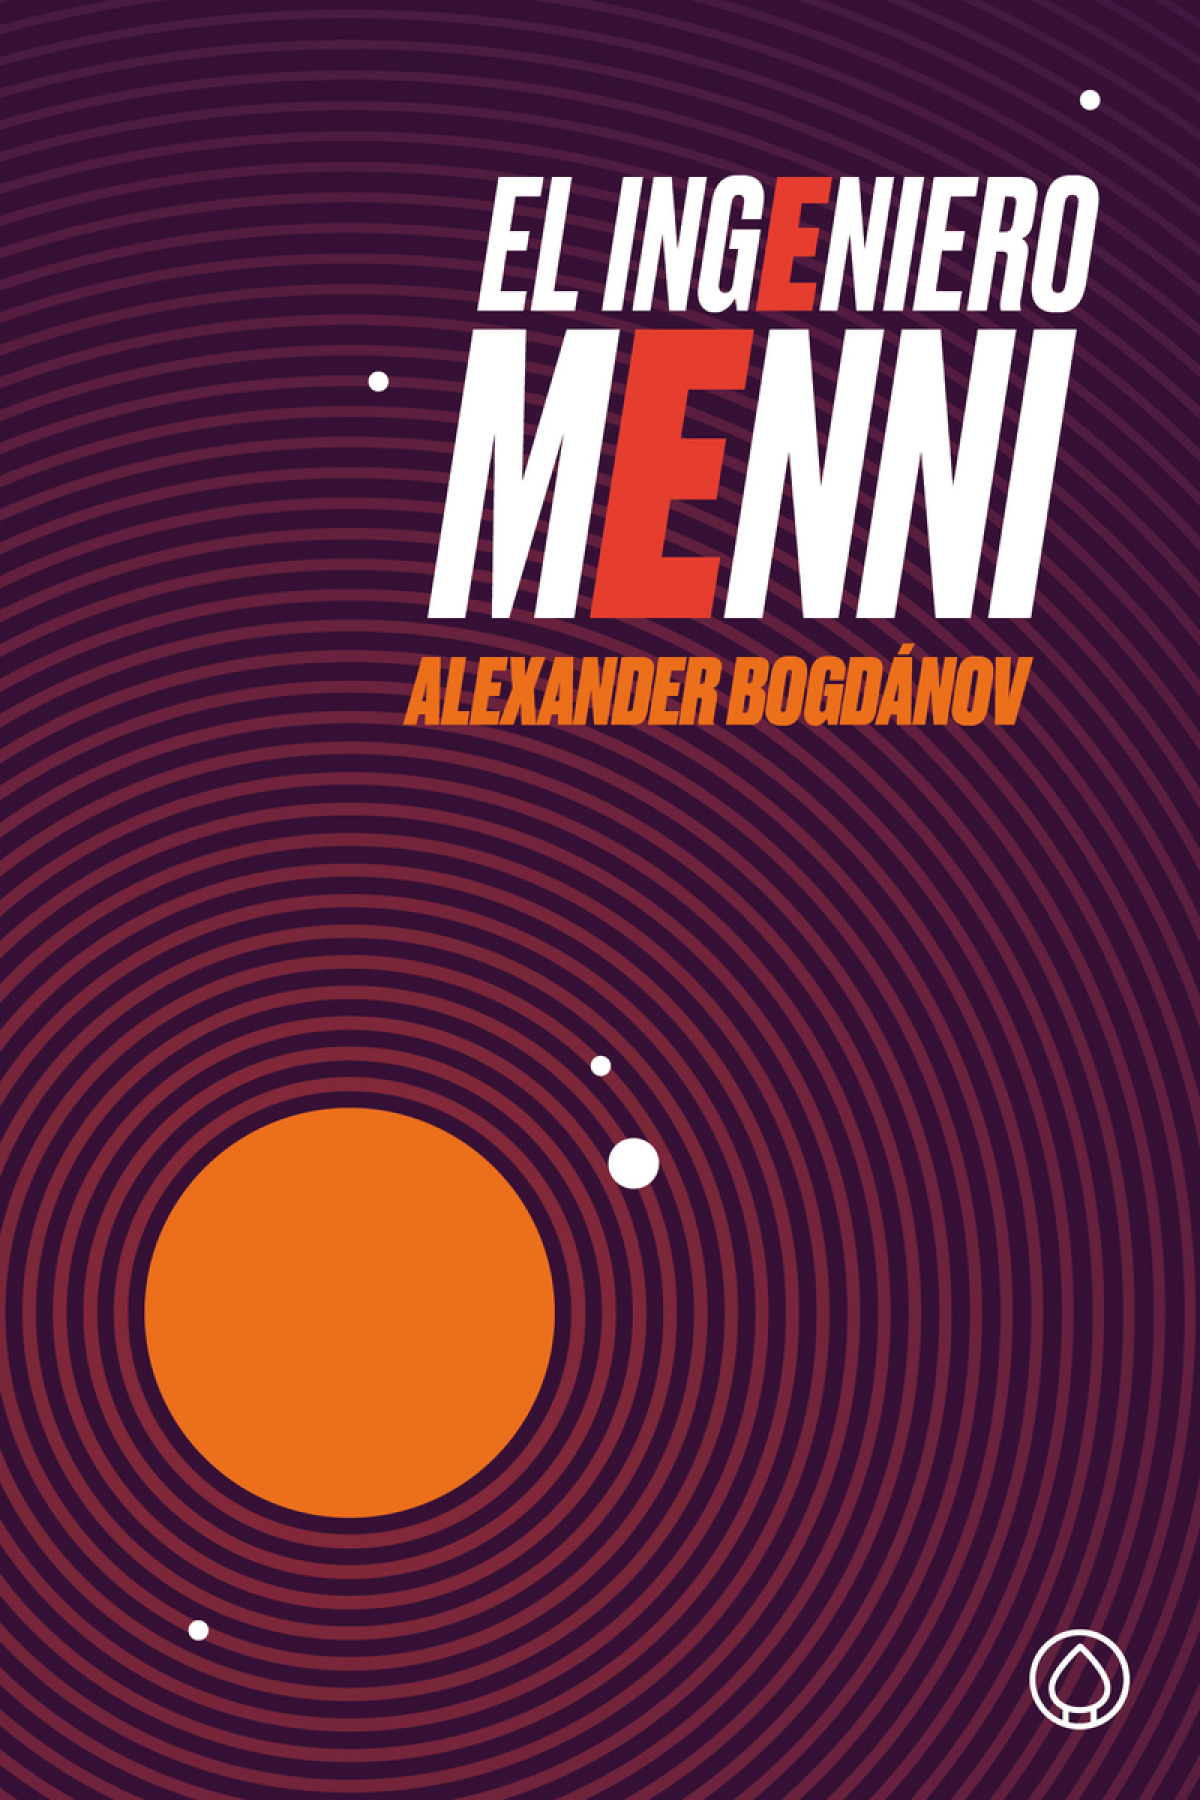 El ingeniero menni - Alexander Bogdánov